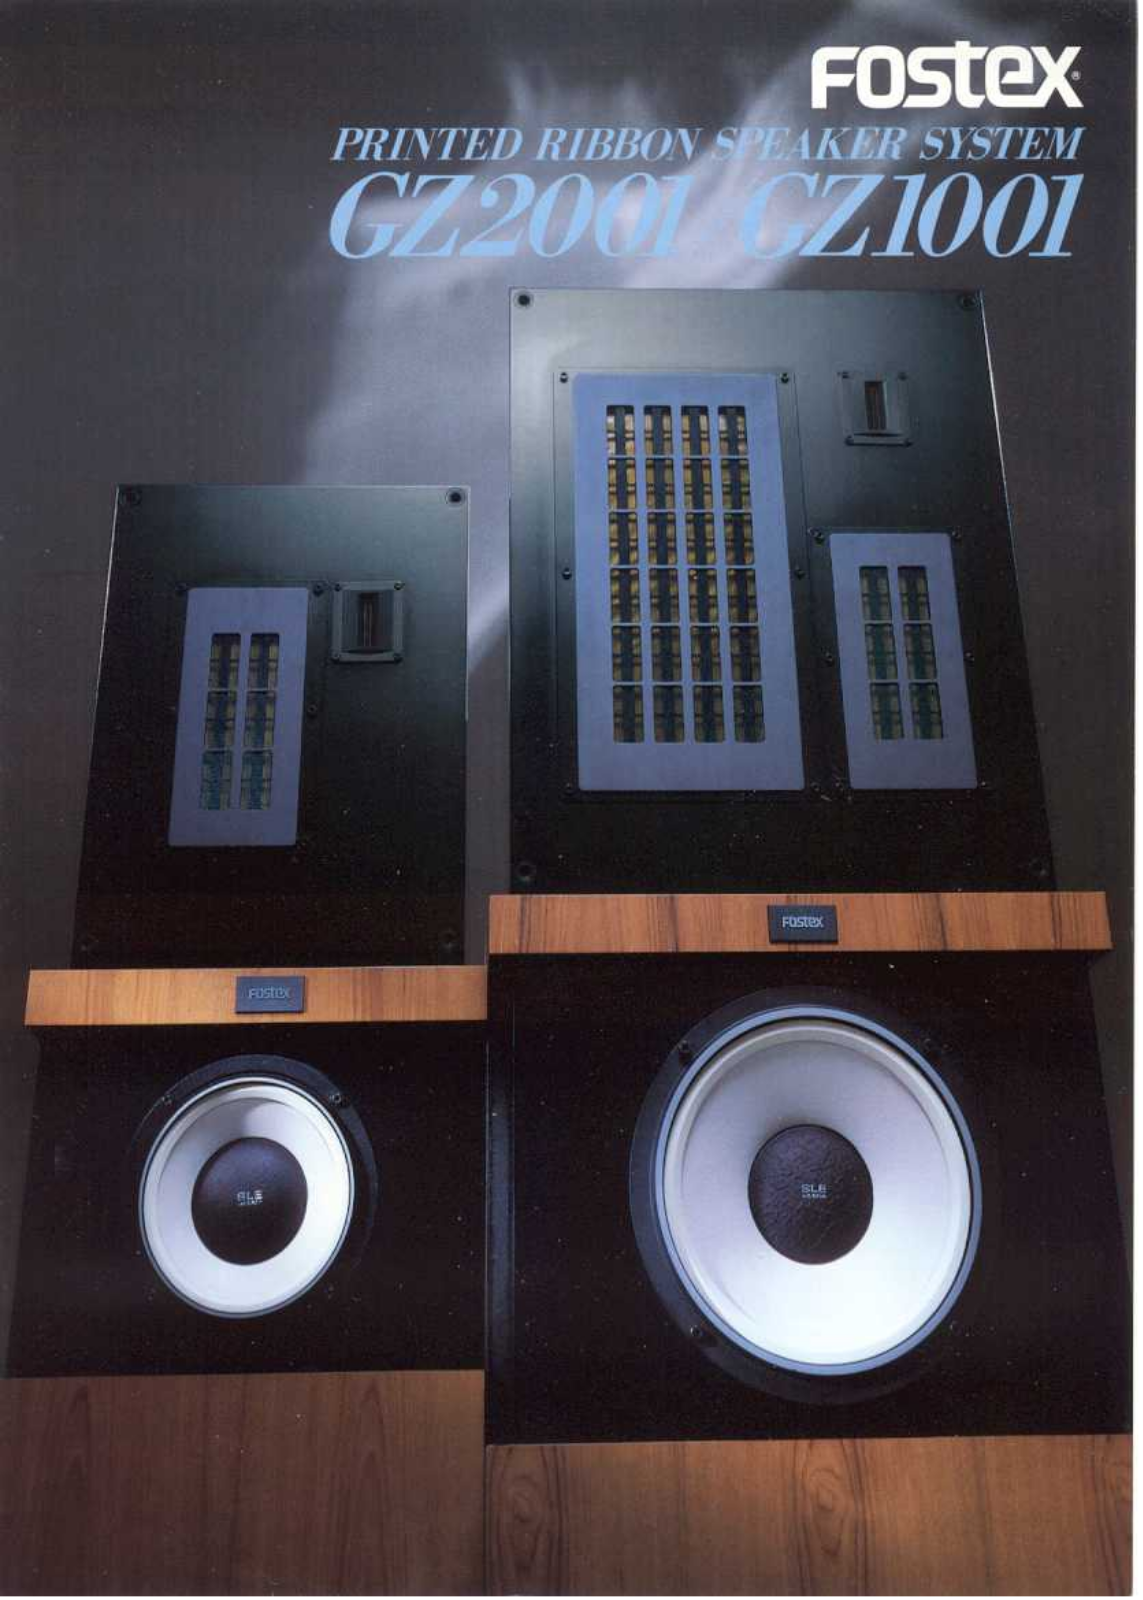 Fostex GZ-1001 Brochure